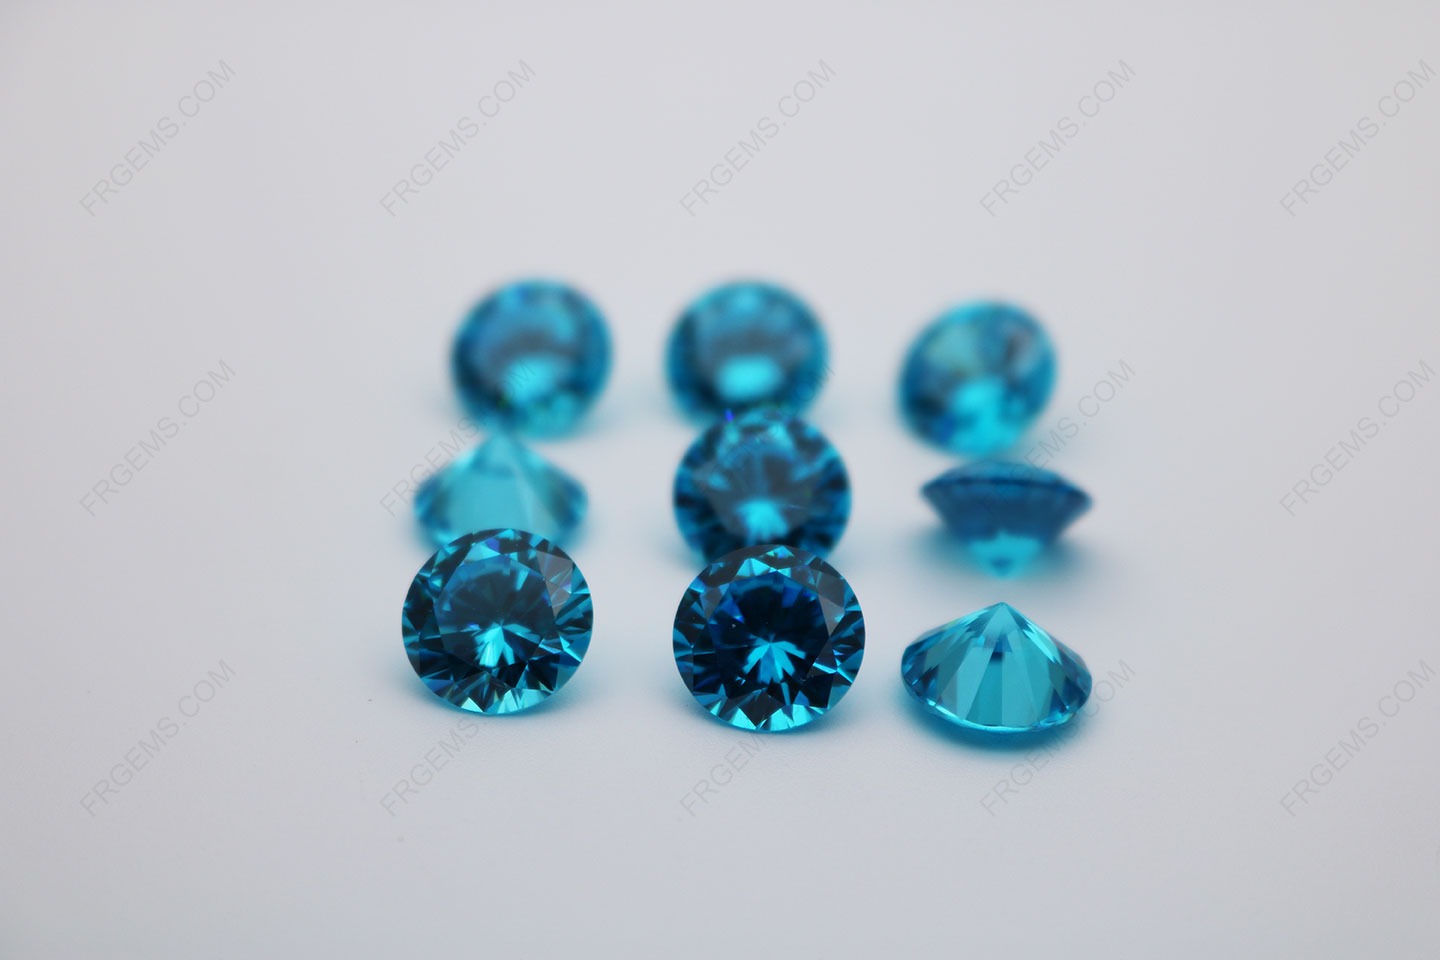 Cubic_Zirconia_Aquamarine_Dark_Shade_Round_Diamond_faceted_cut_10mm_stones_China_IMG_0195